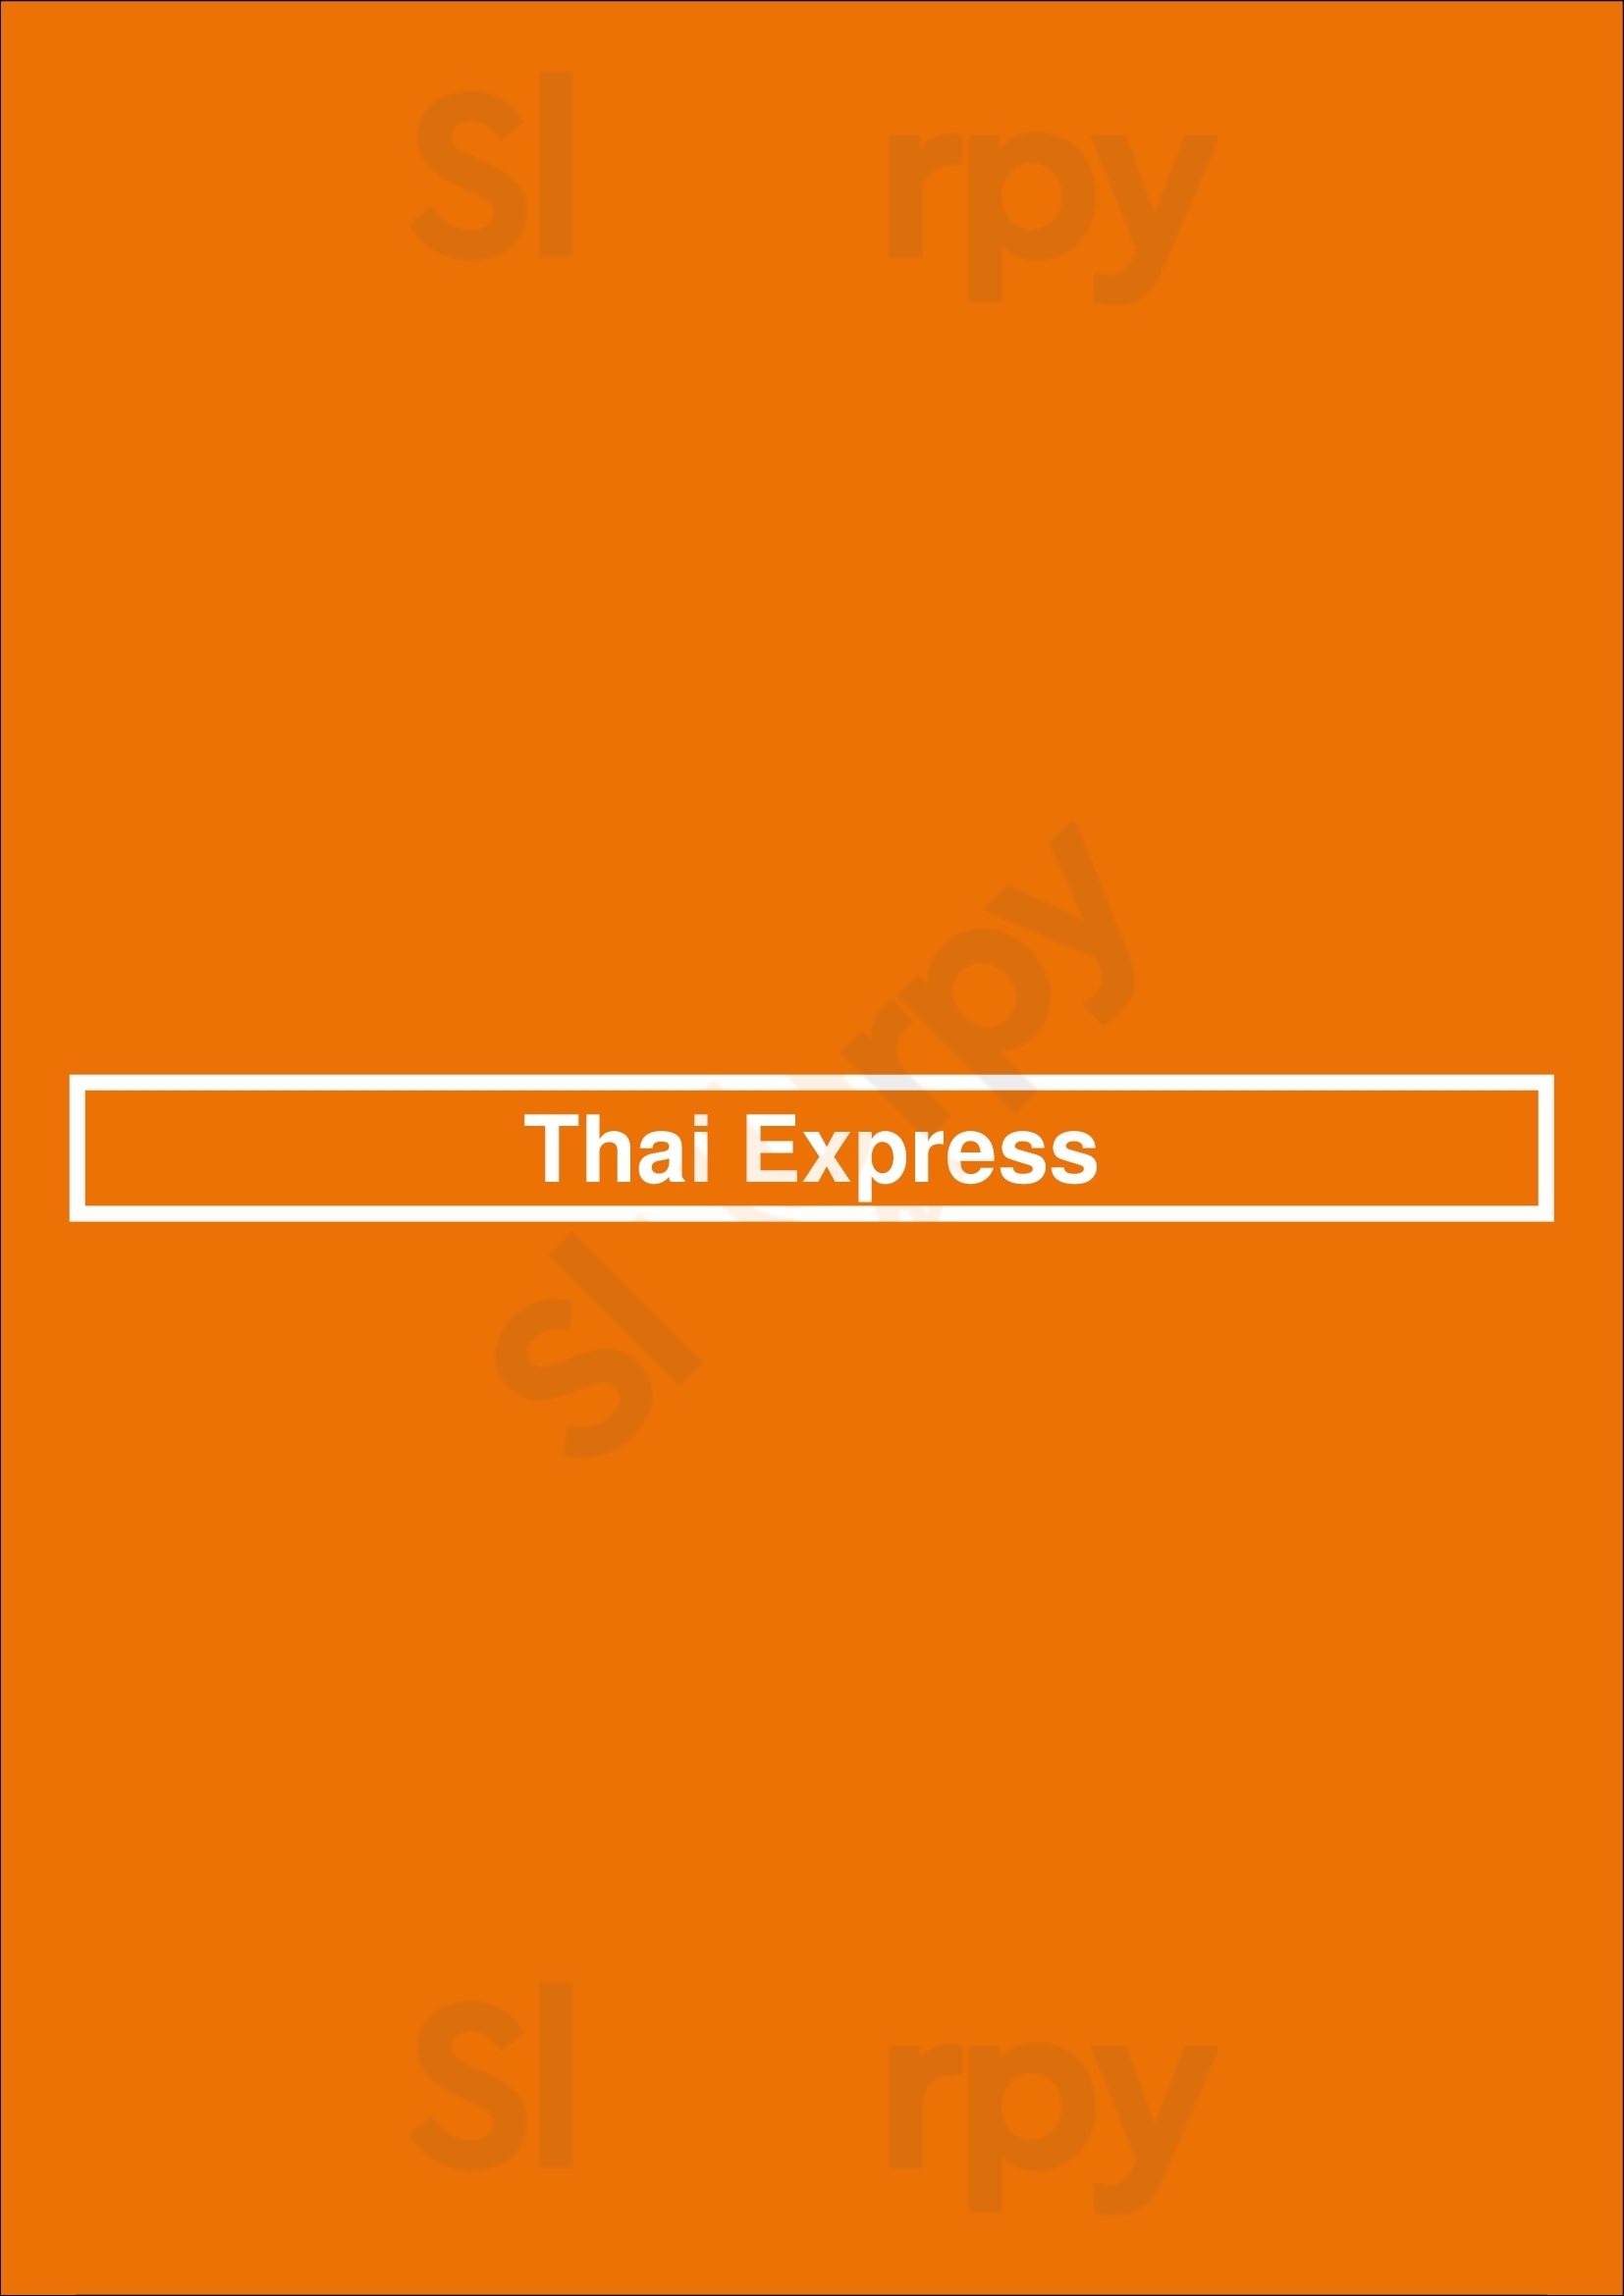 Thai Express Restaurant Toronto Toronto Menu - 1